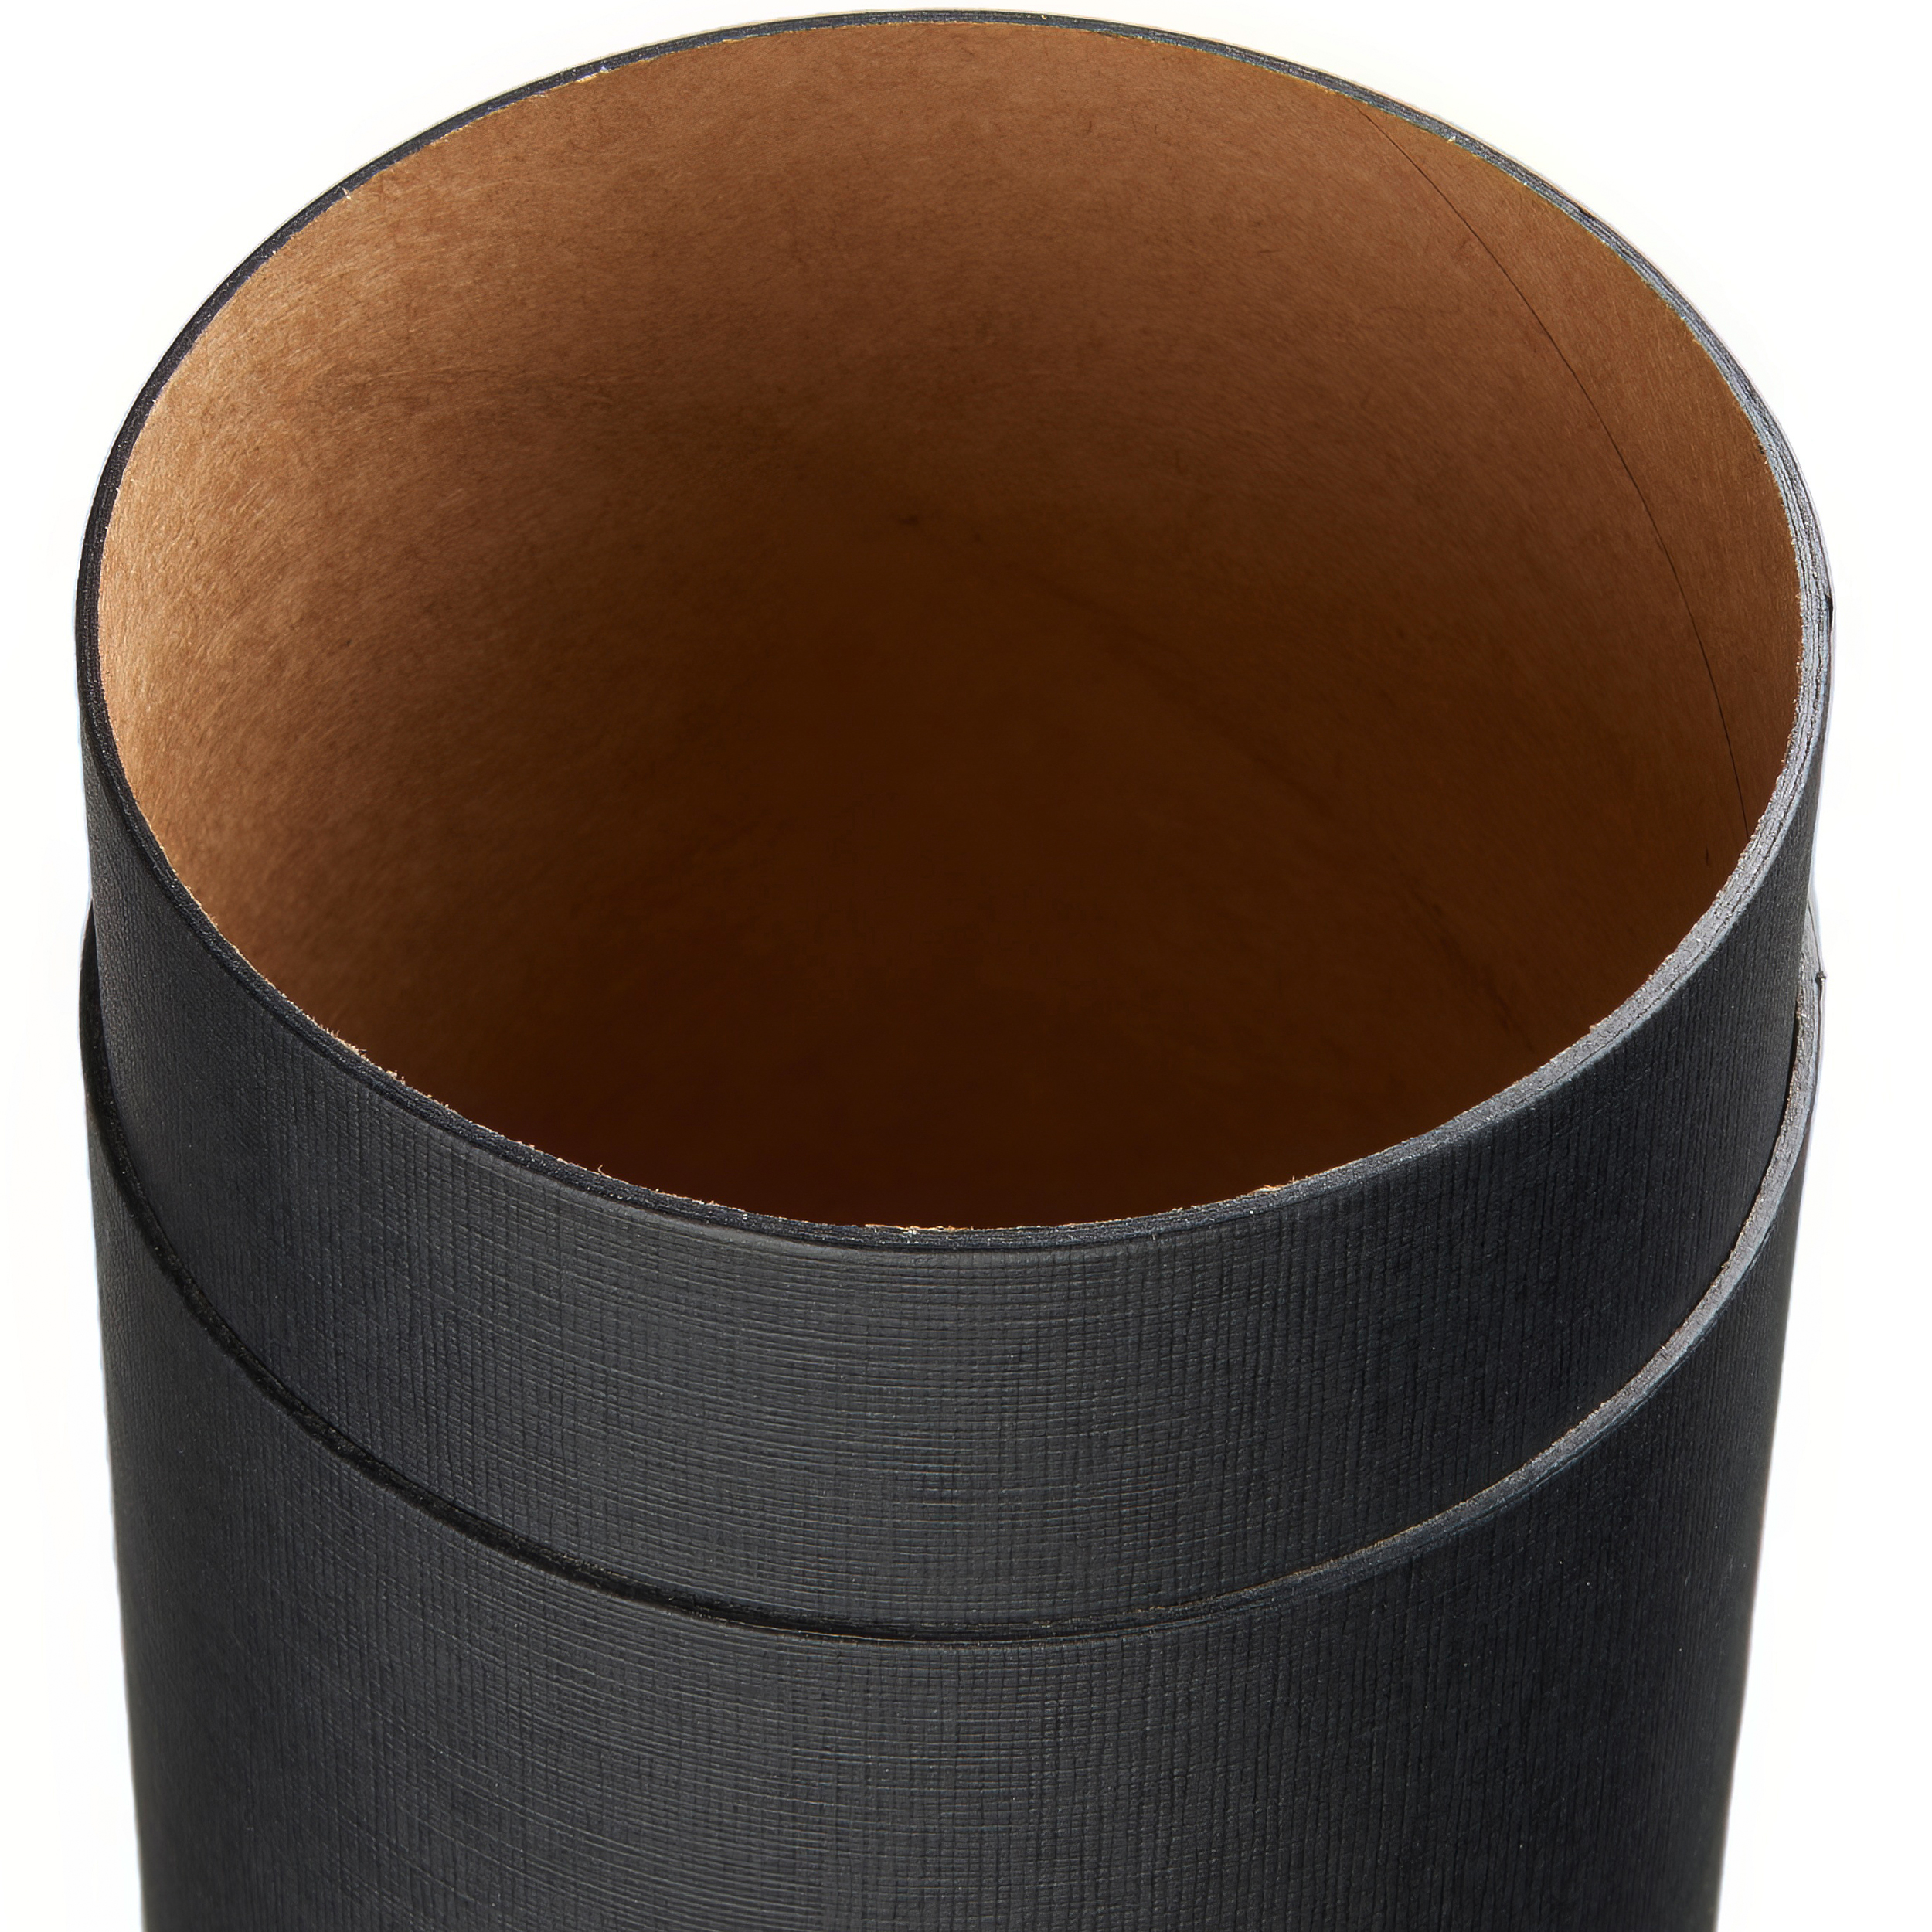 50 Pappdosen schwarz linon | 120 x 66 mm I food grade